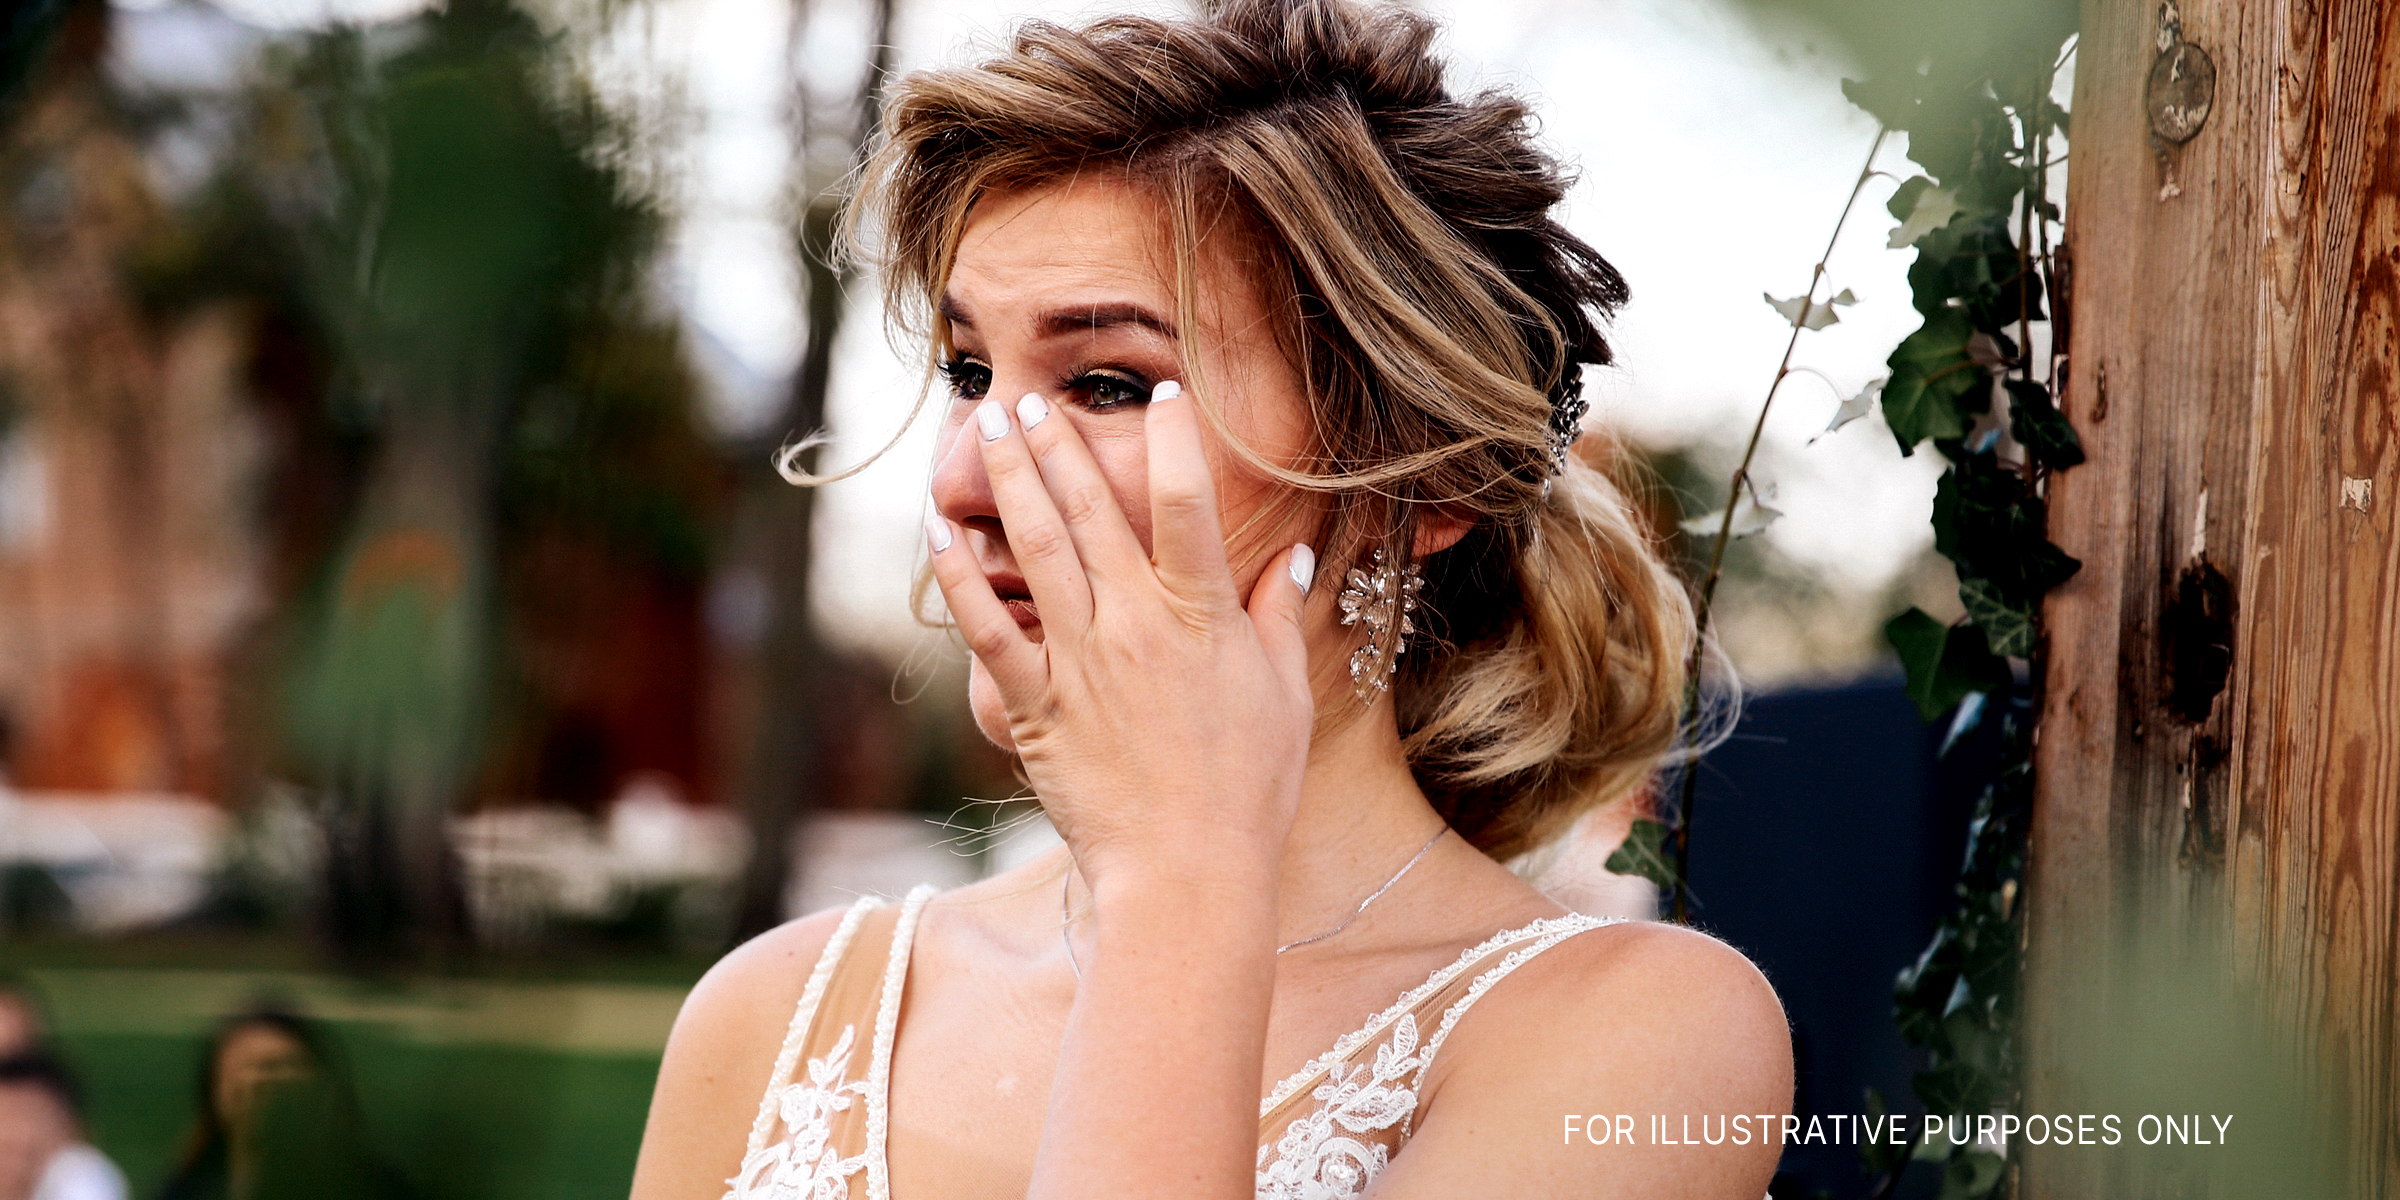 A crying bride | Source: Freepik